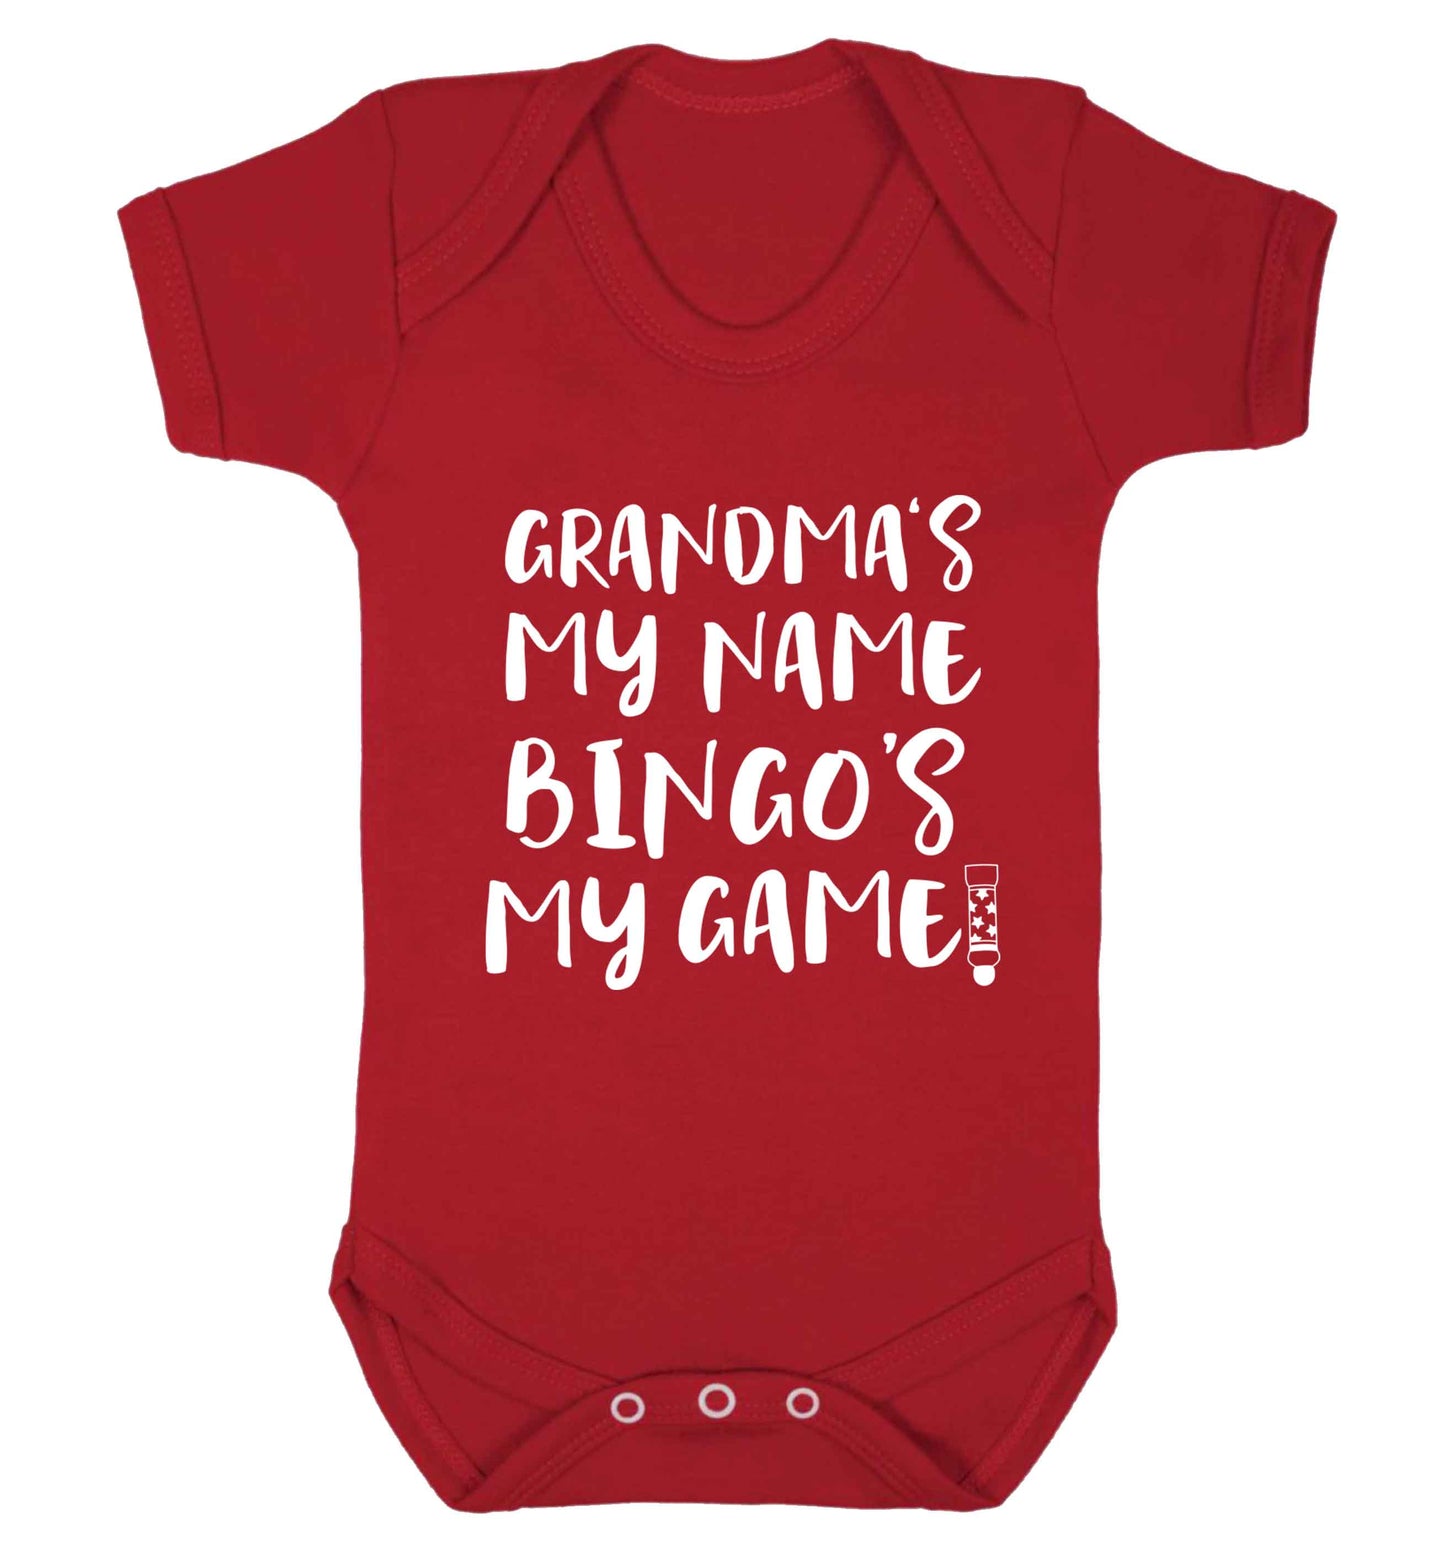 Grandma's my name bingo's my game! Baby Vest red 18-24 months